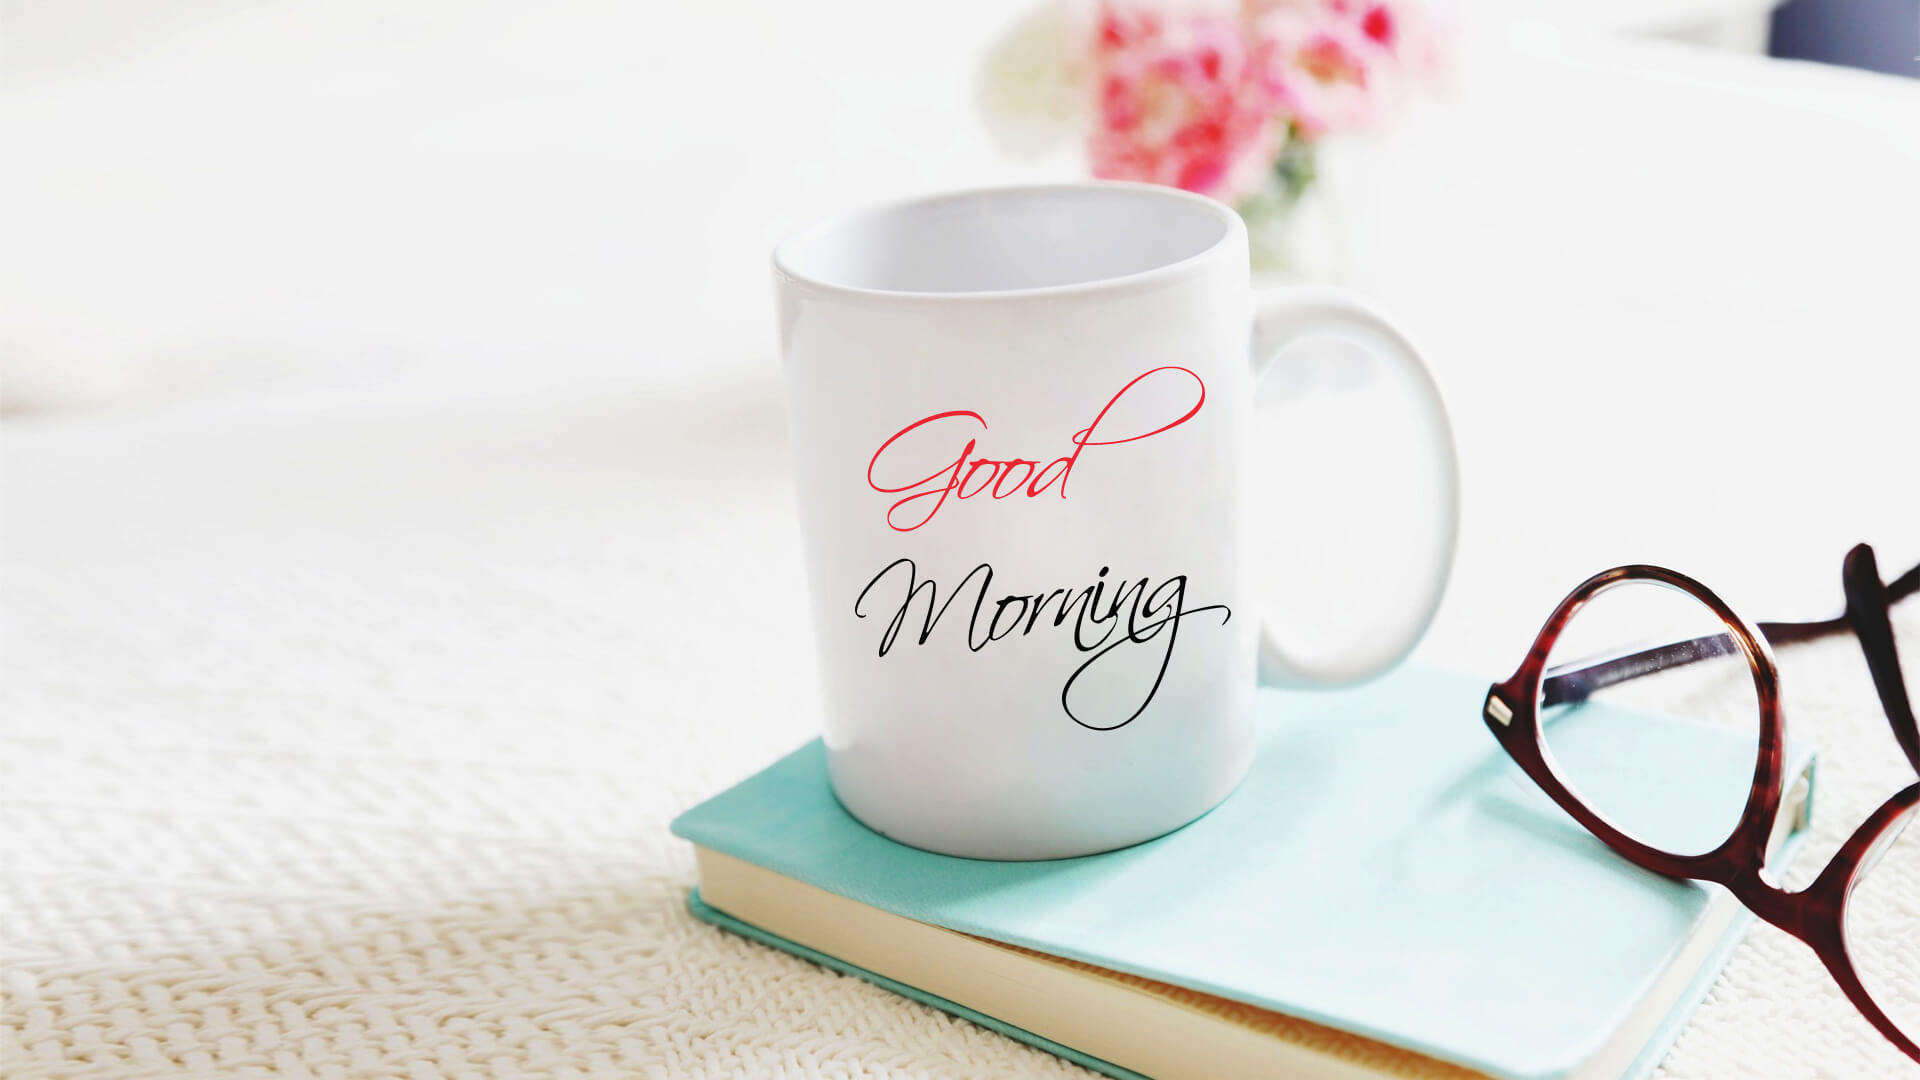 good morning wallpaper,cup,mug,coffee cup,drinkware,teacup